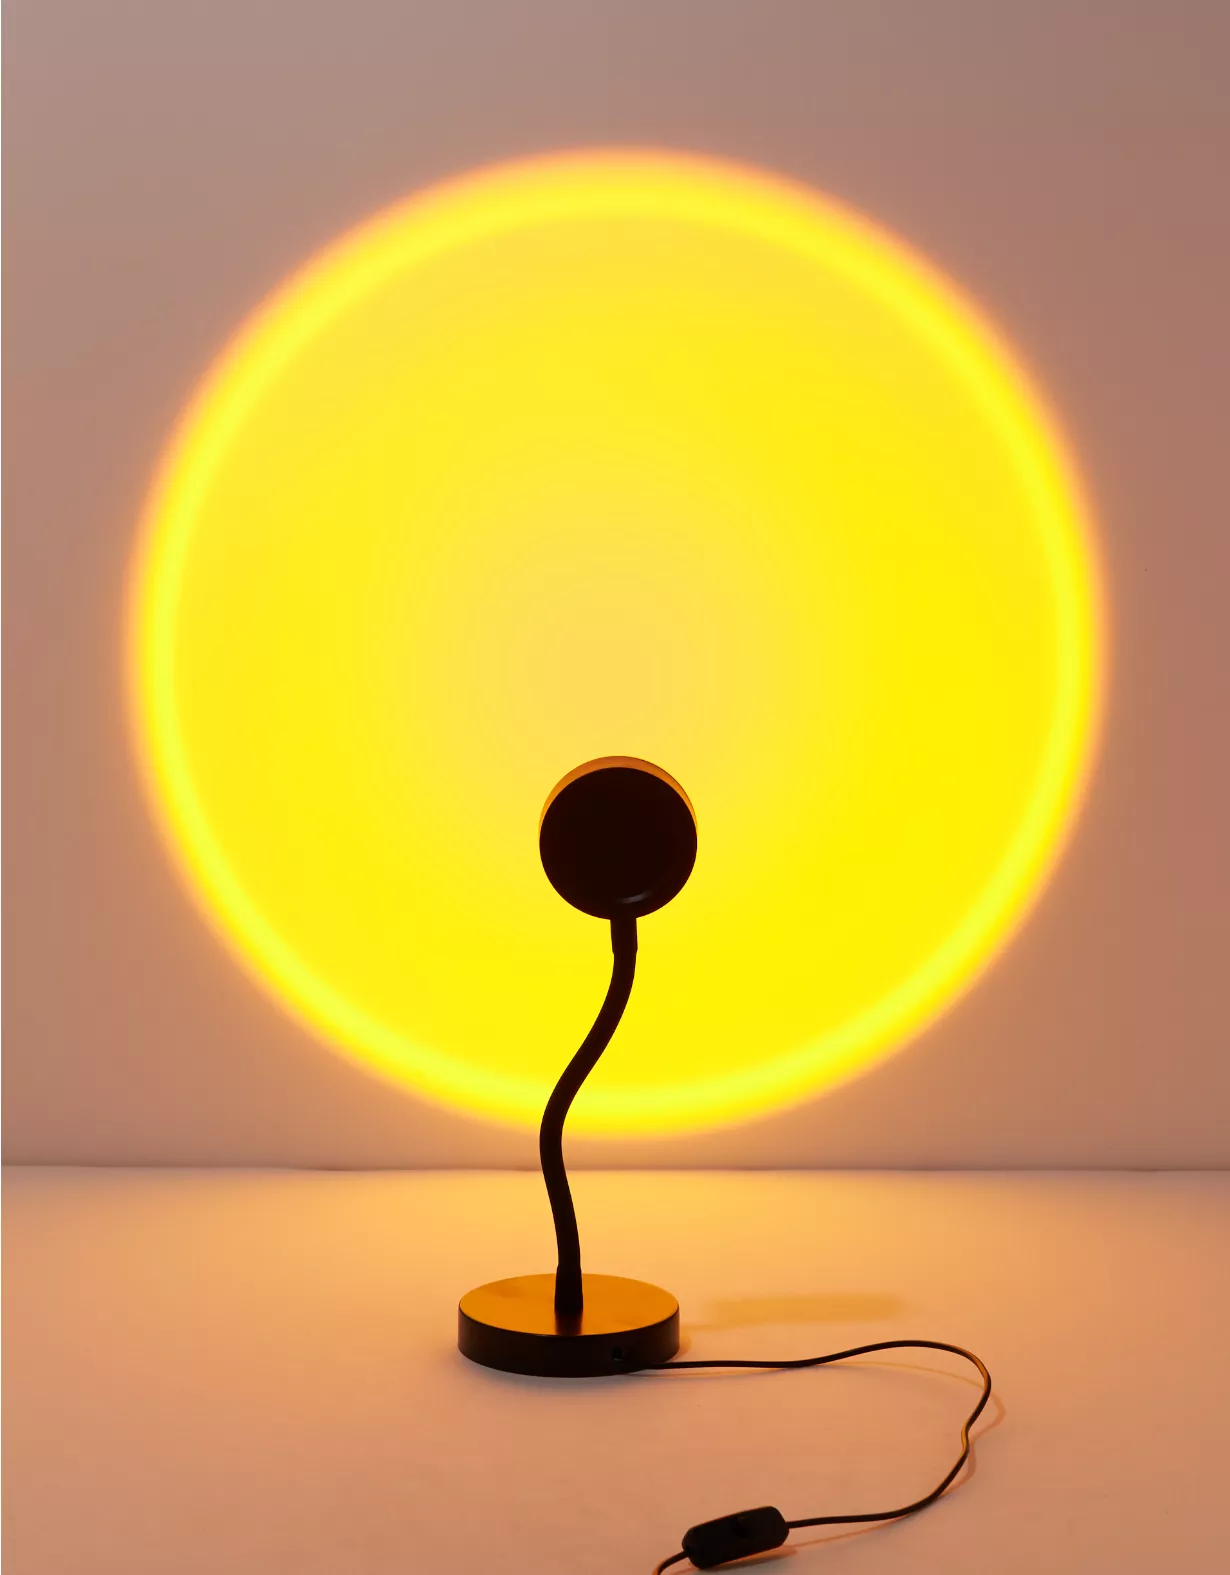 ae.com | Sunset Lamp Projector